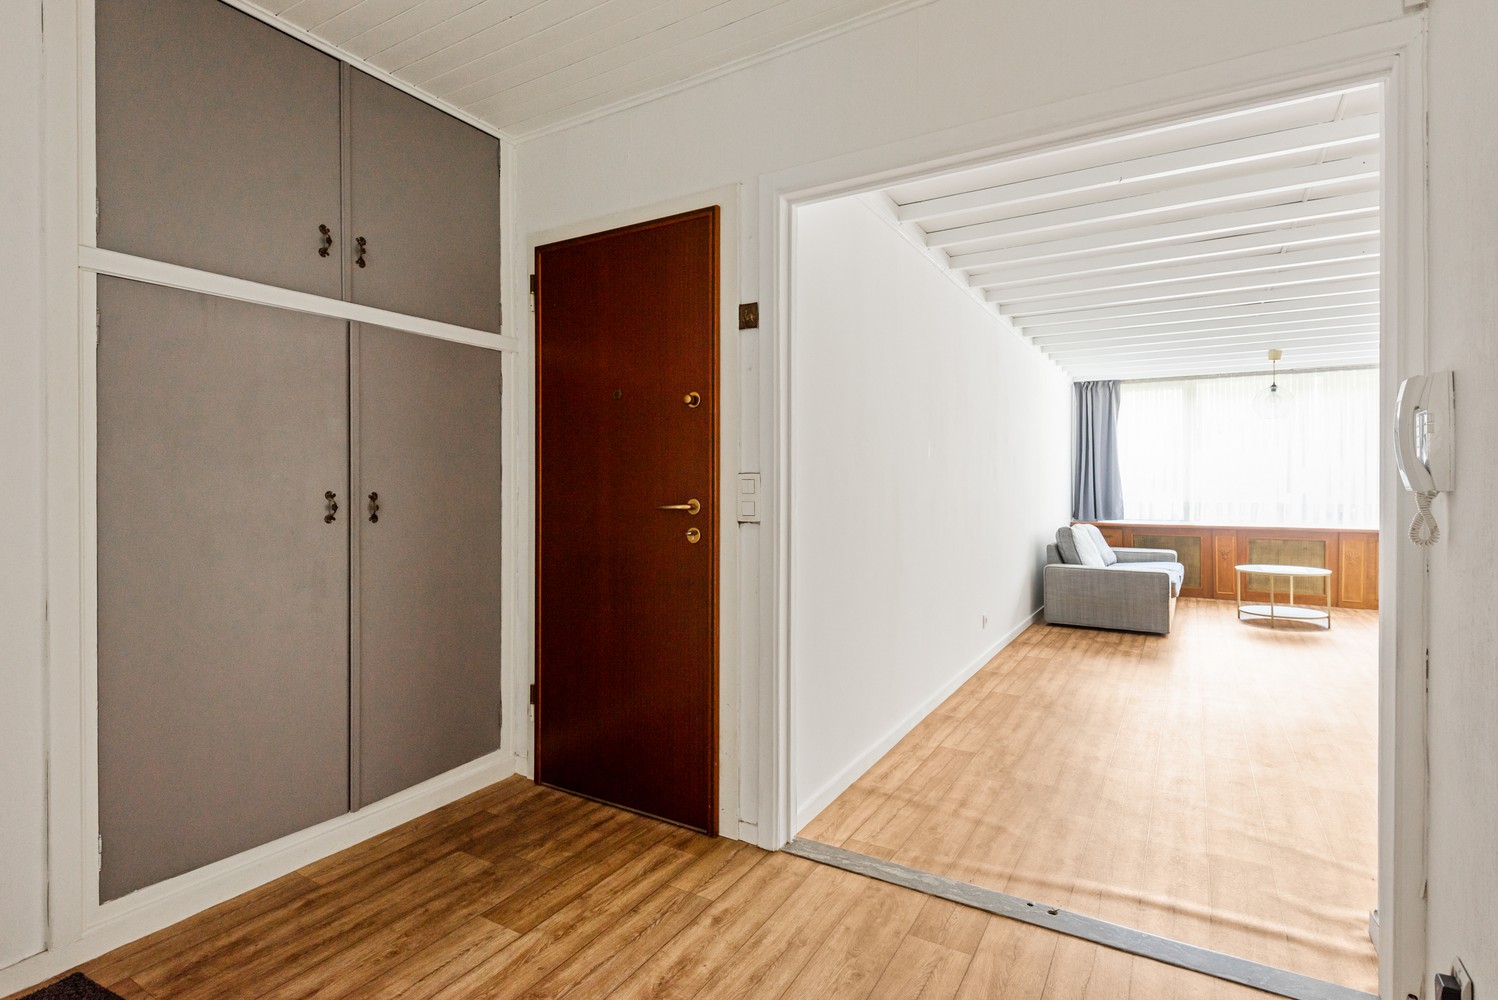 Gelijkvloers appartement met 1 slaapkamer en grote tuin te koop in Deurne. afbeelding 13